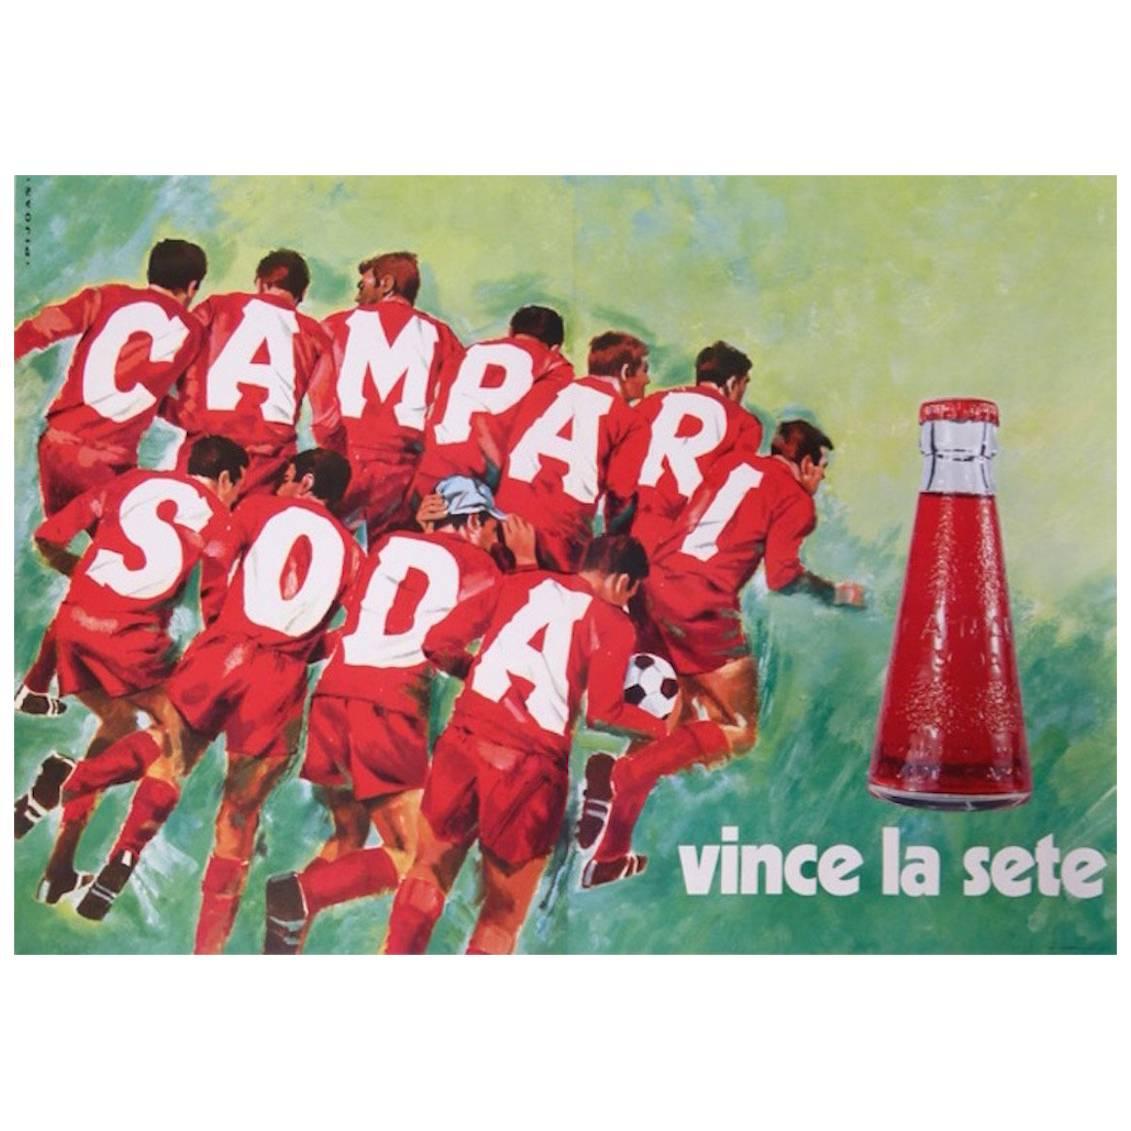 Original Vintage Poster Campari Soda Vince La Sete Football Soccer Pijoan For Sale